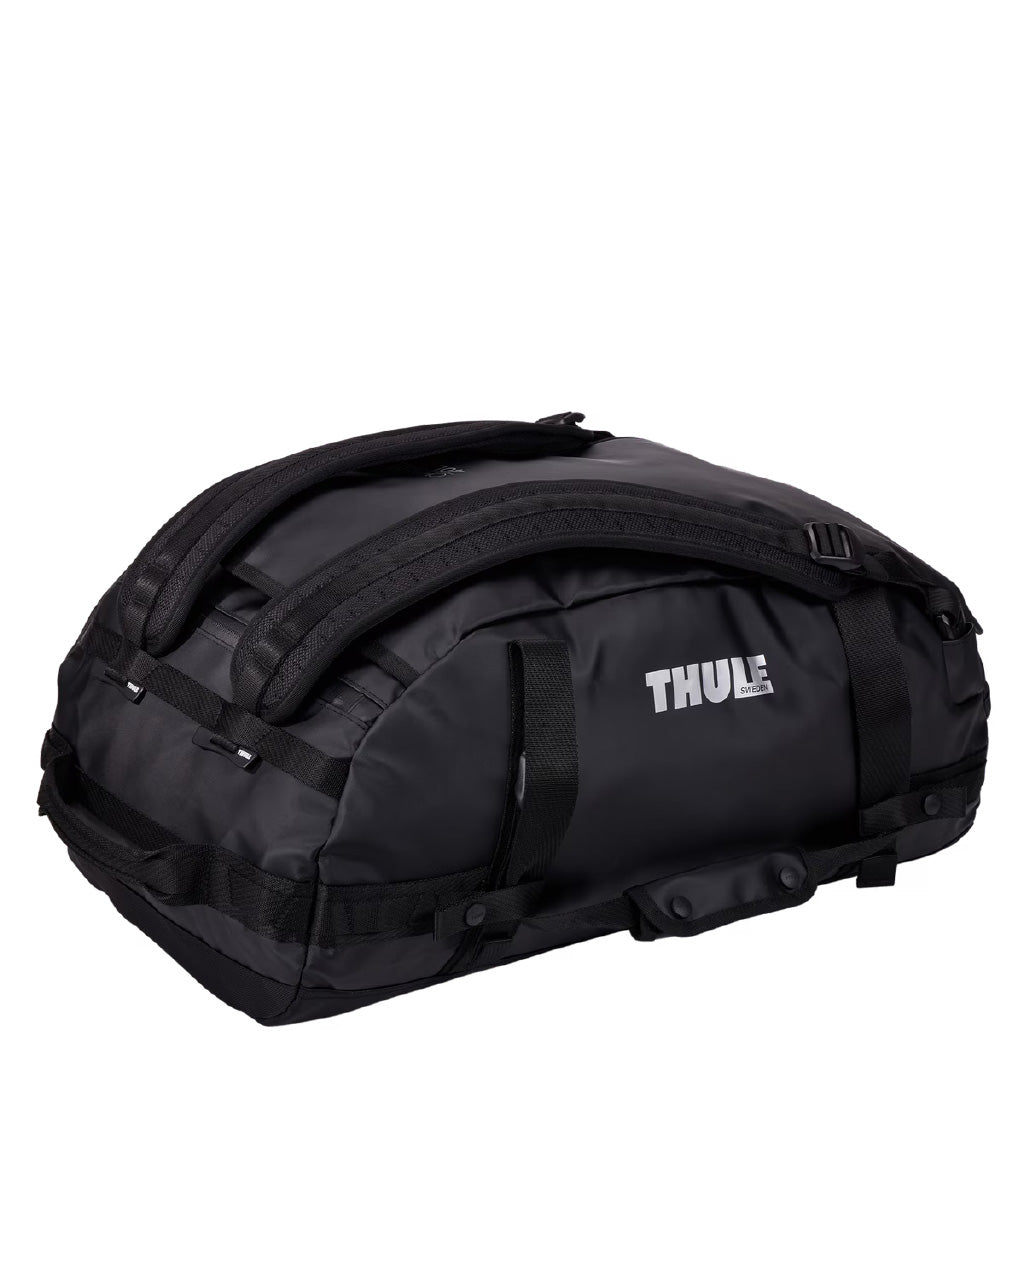 Thule Chasm Sport Duffel Bag 40L